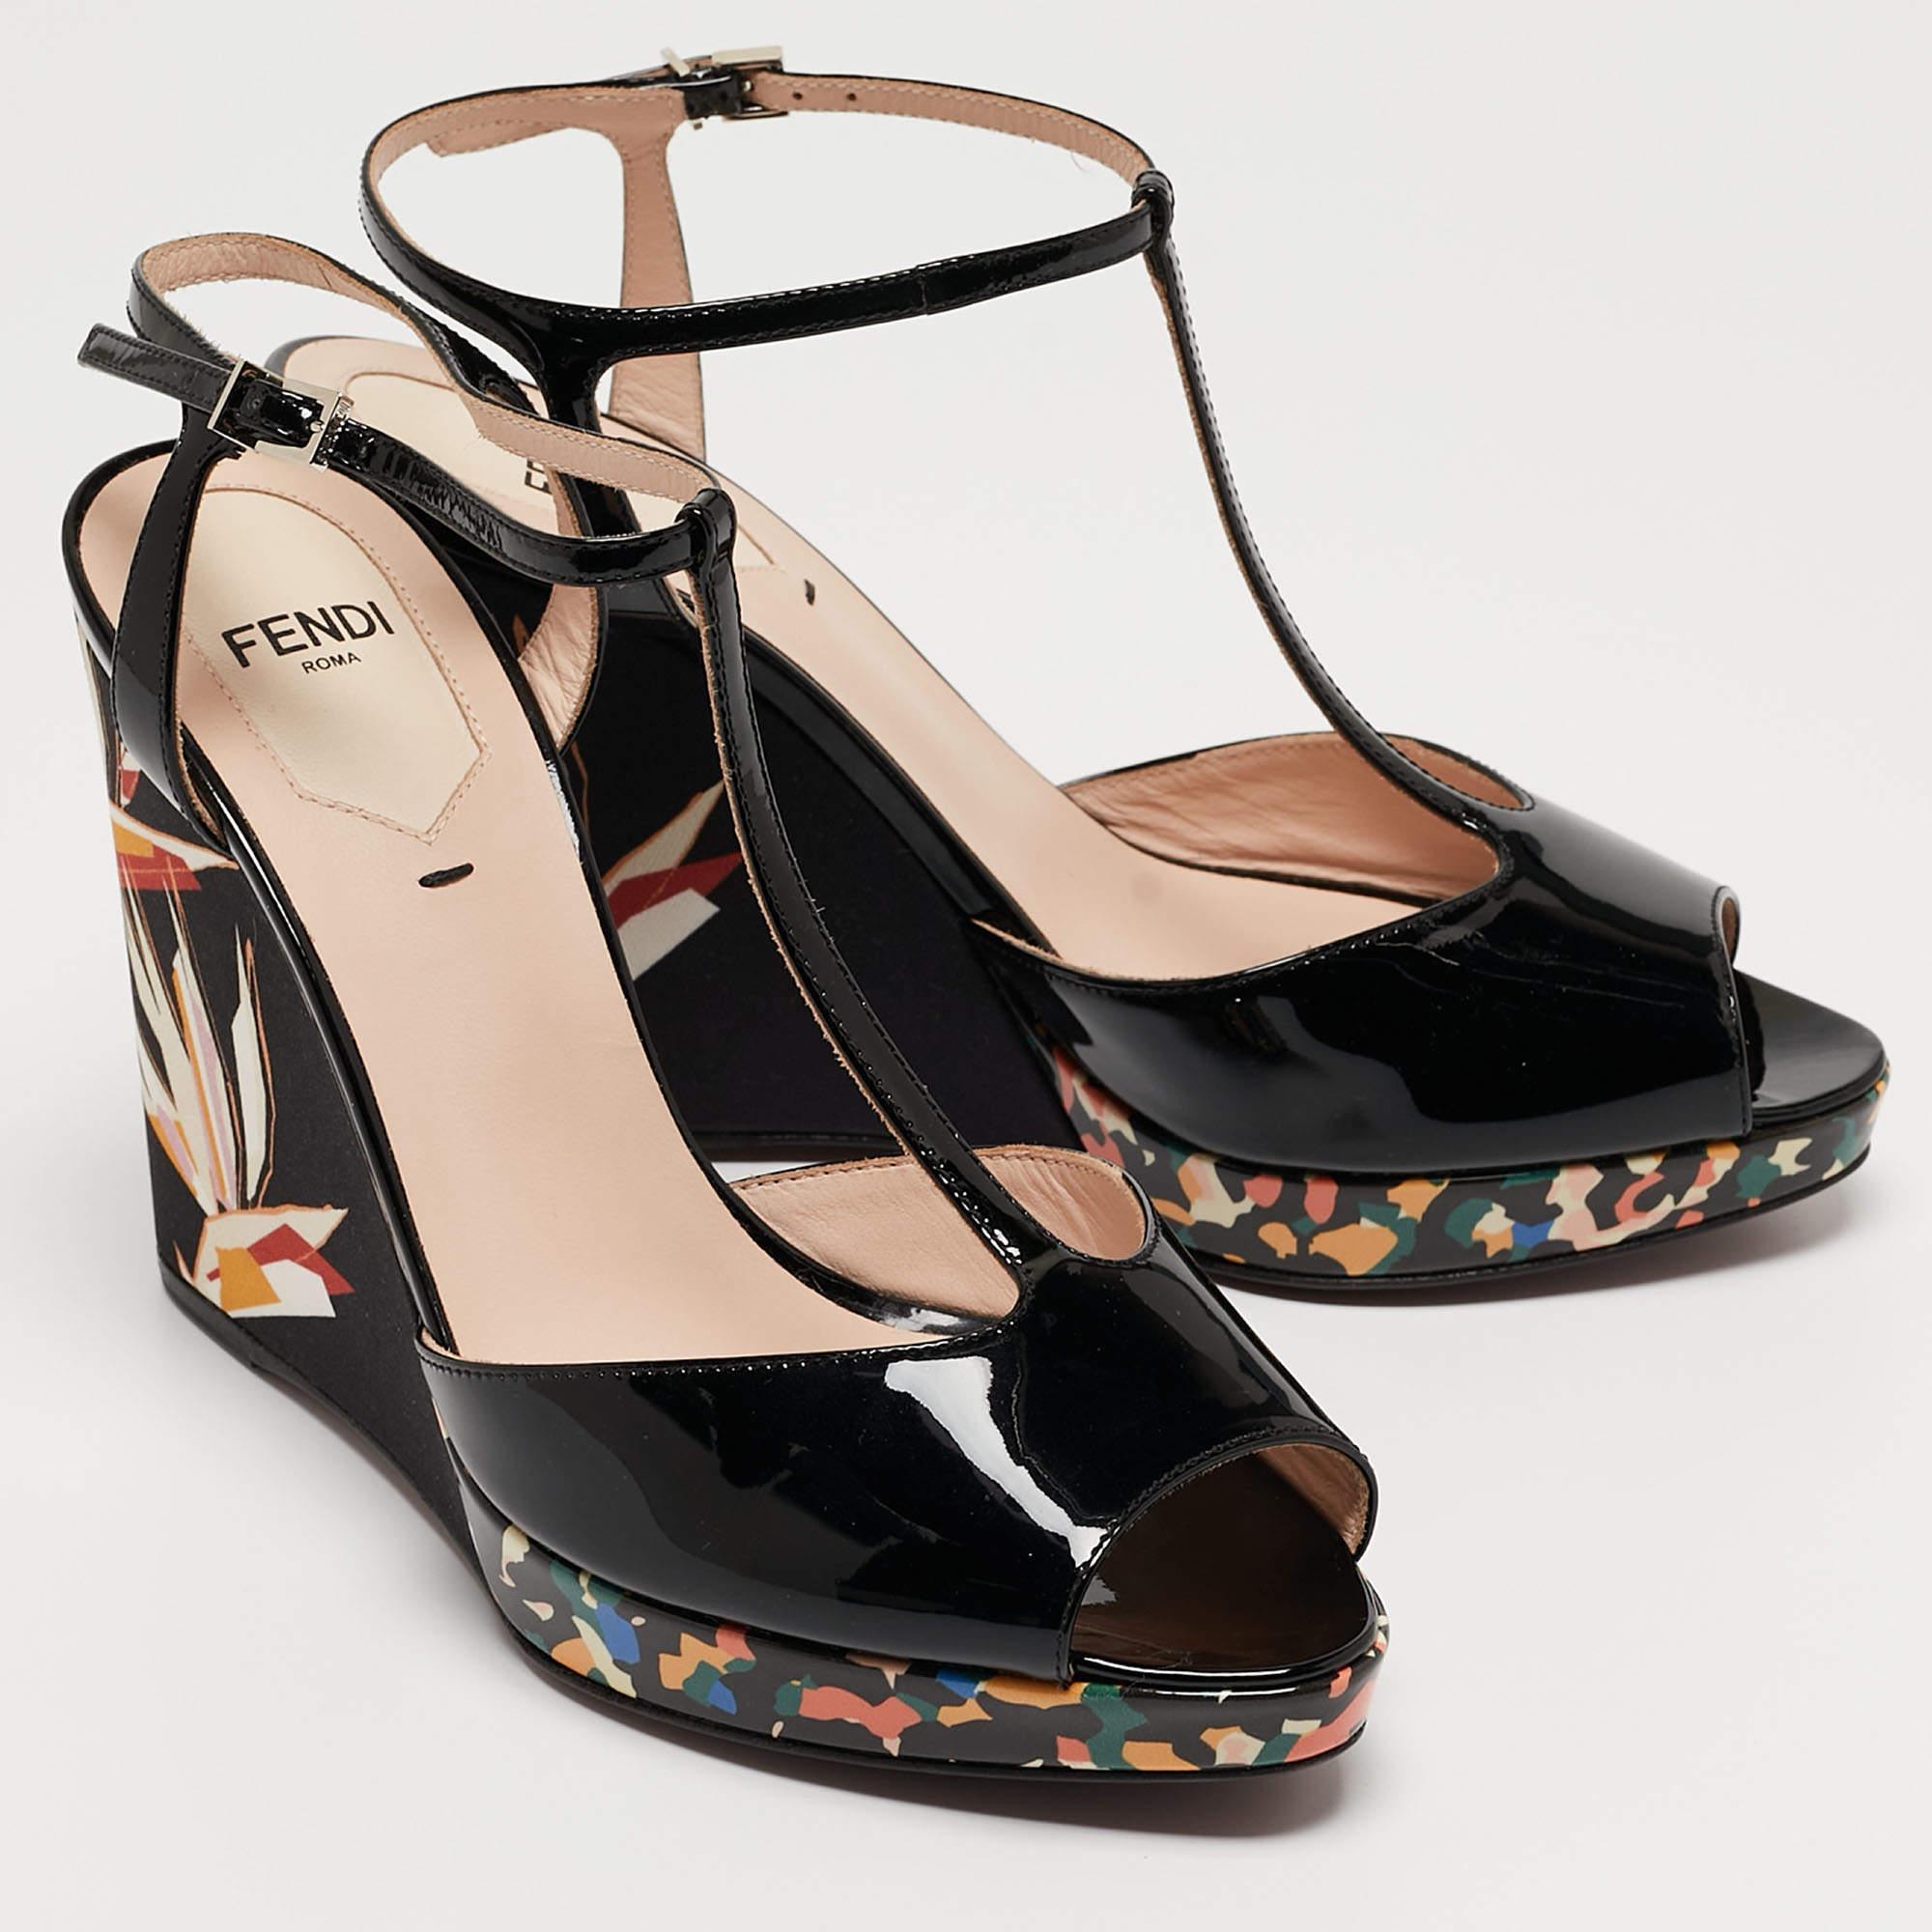 Fendi Black Patent Leather Bird Of Paradise T-Strap Wedge Sandals Size 36 1